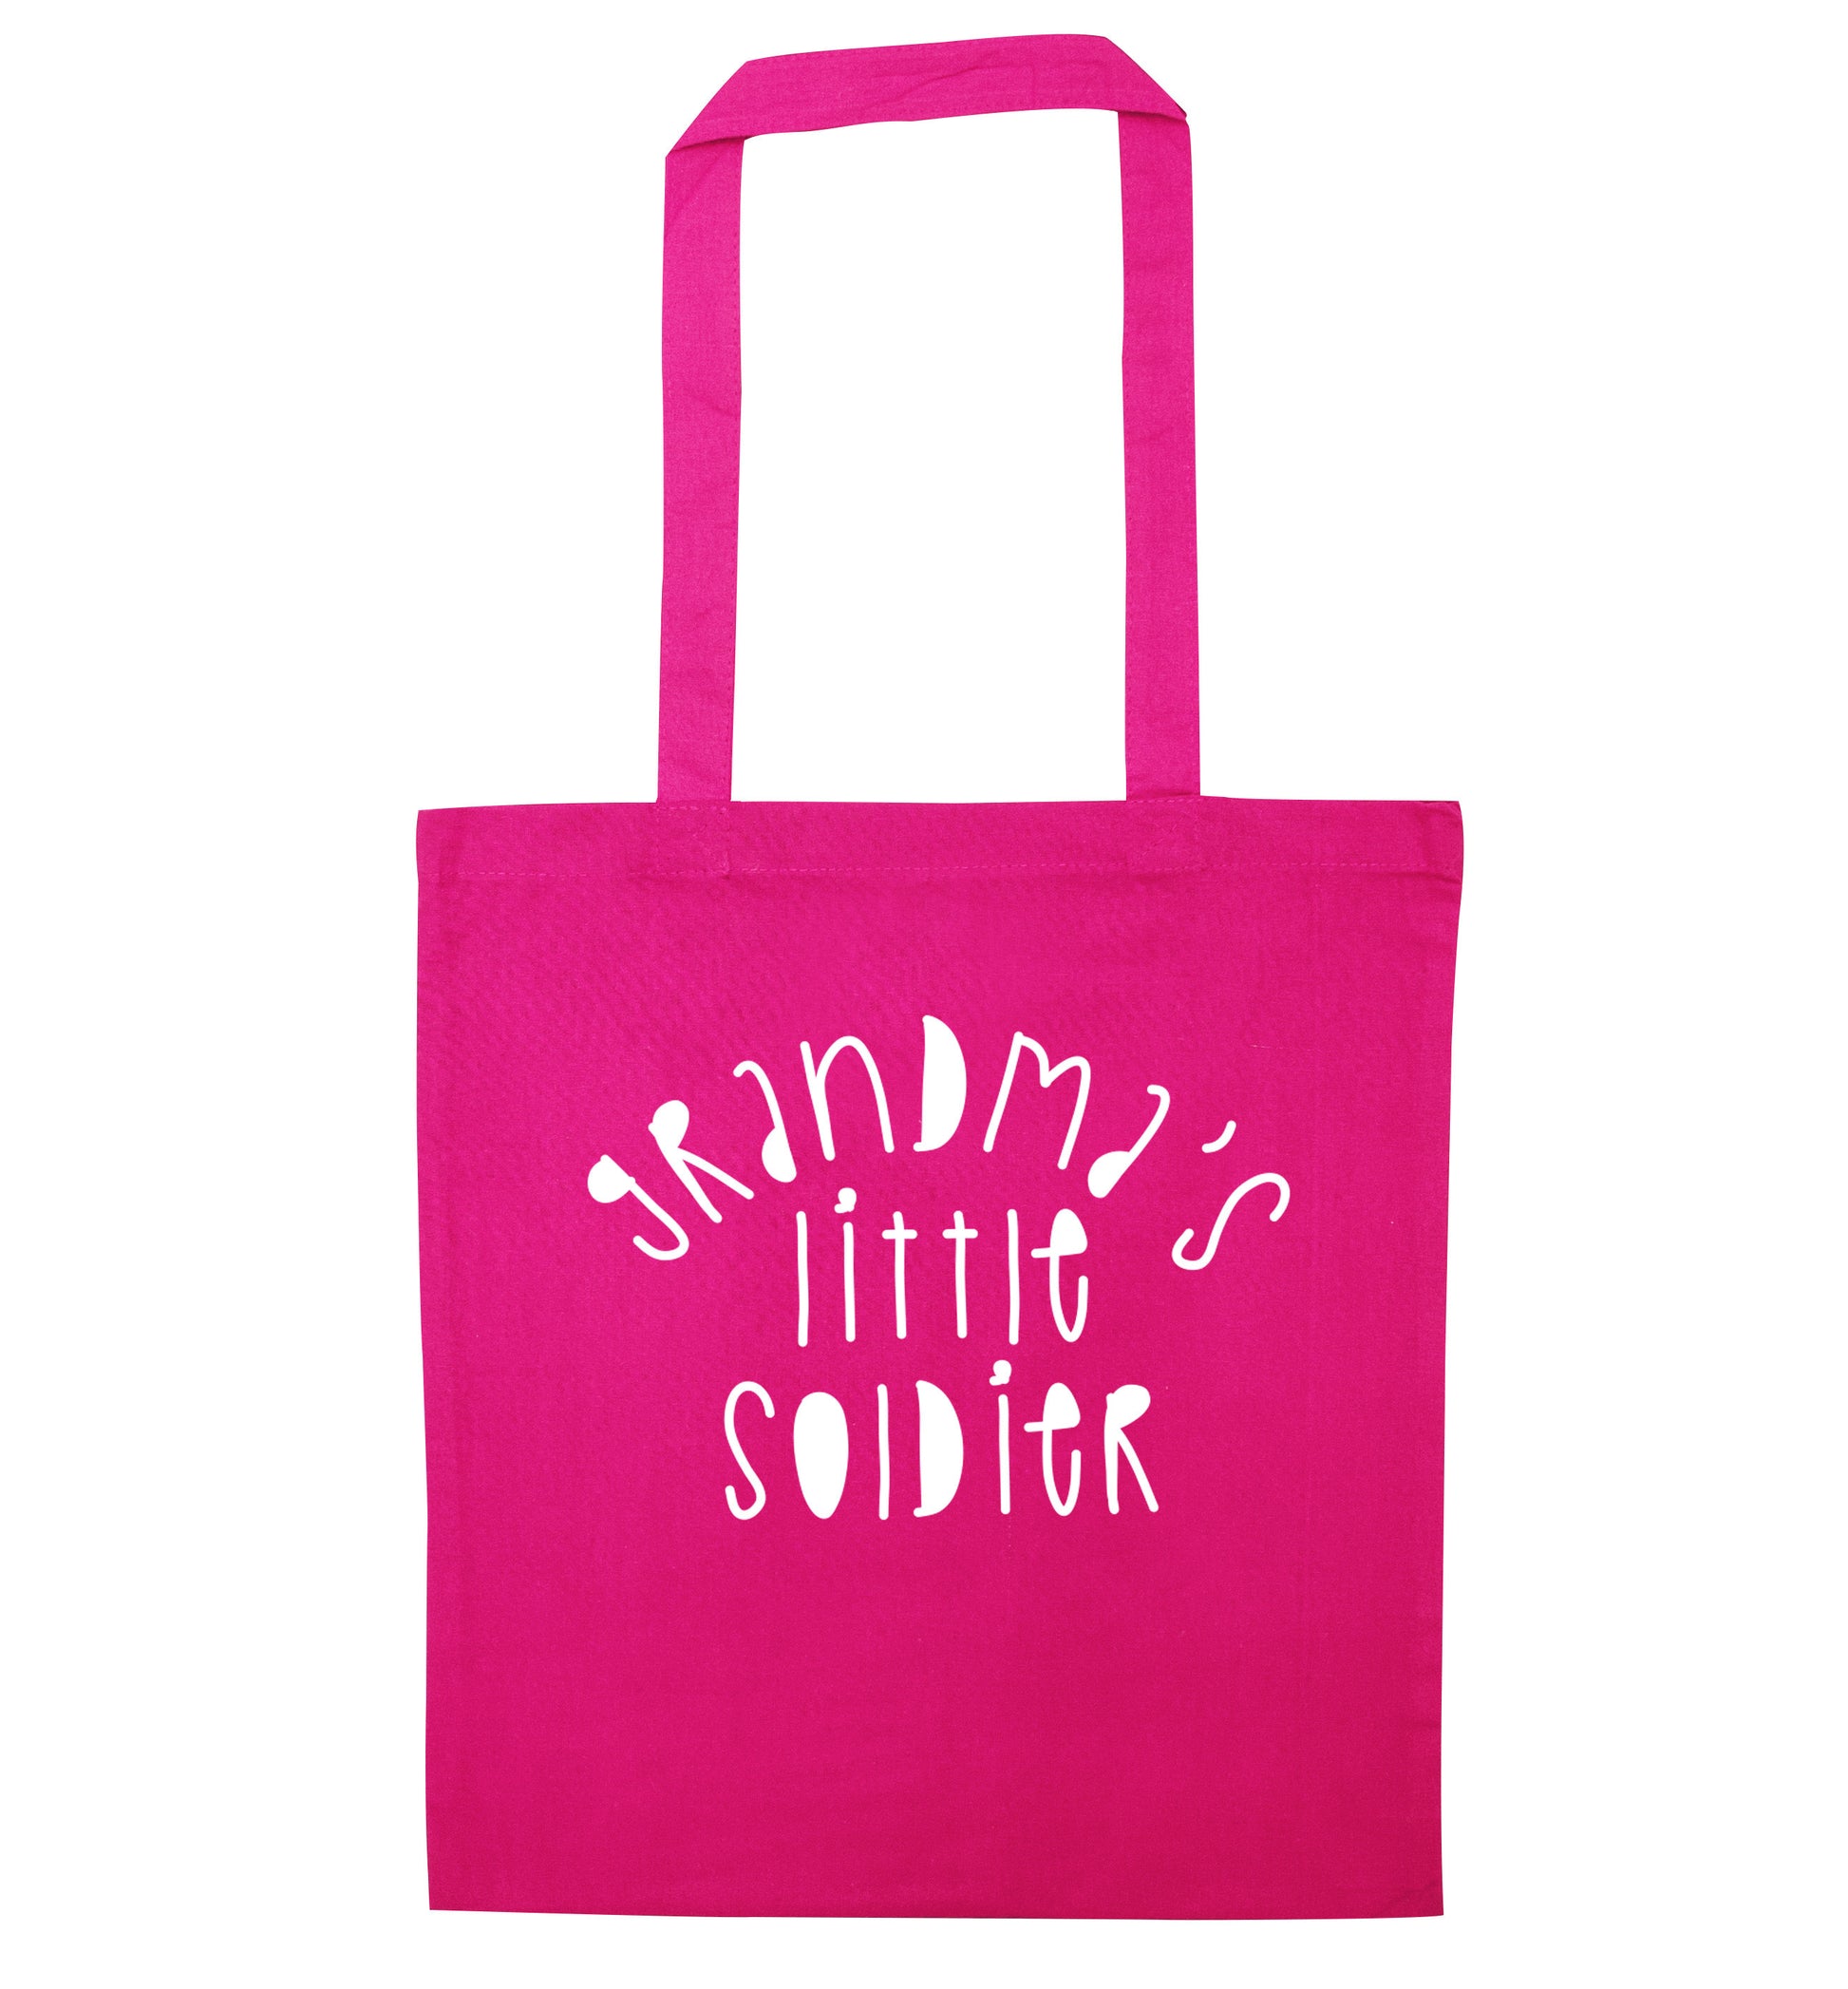 Grandma's little soldier pink tote bag